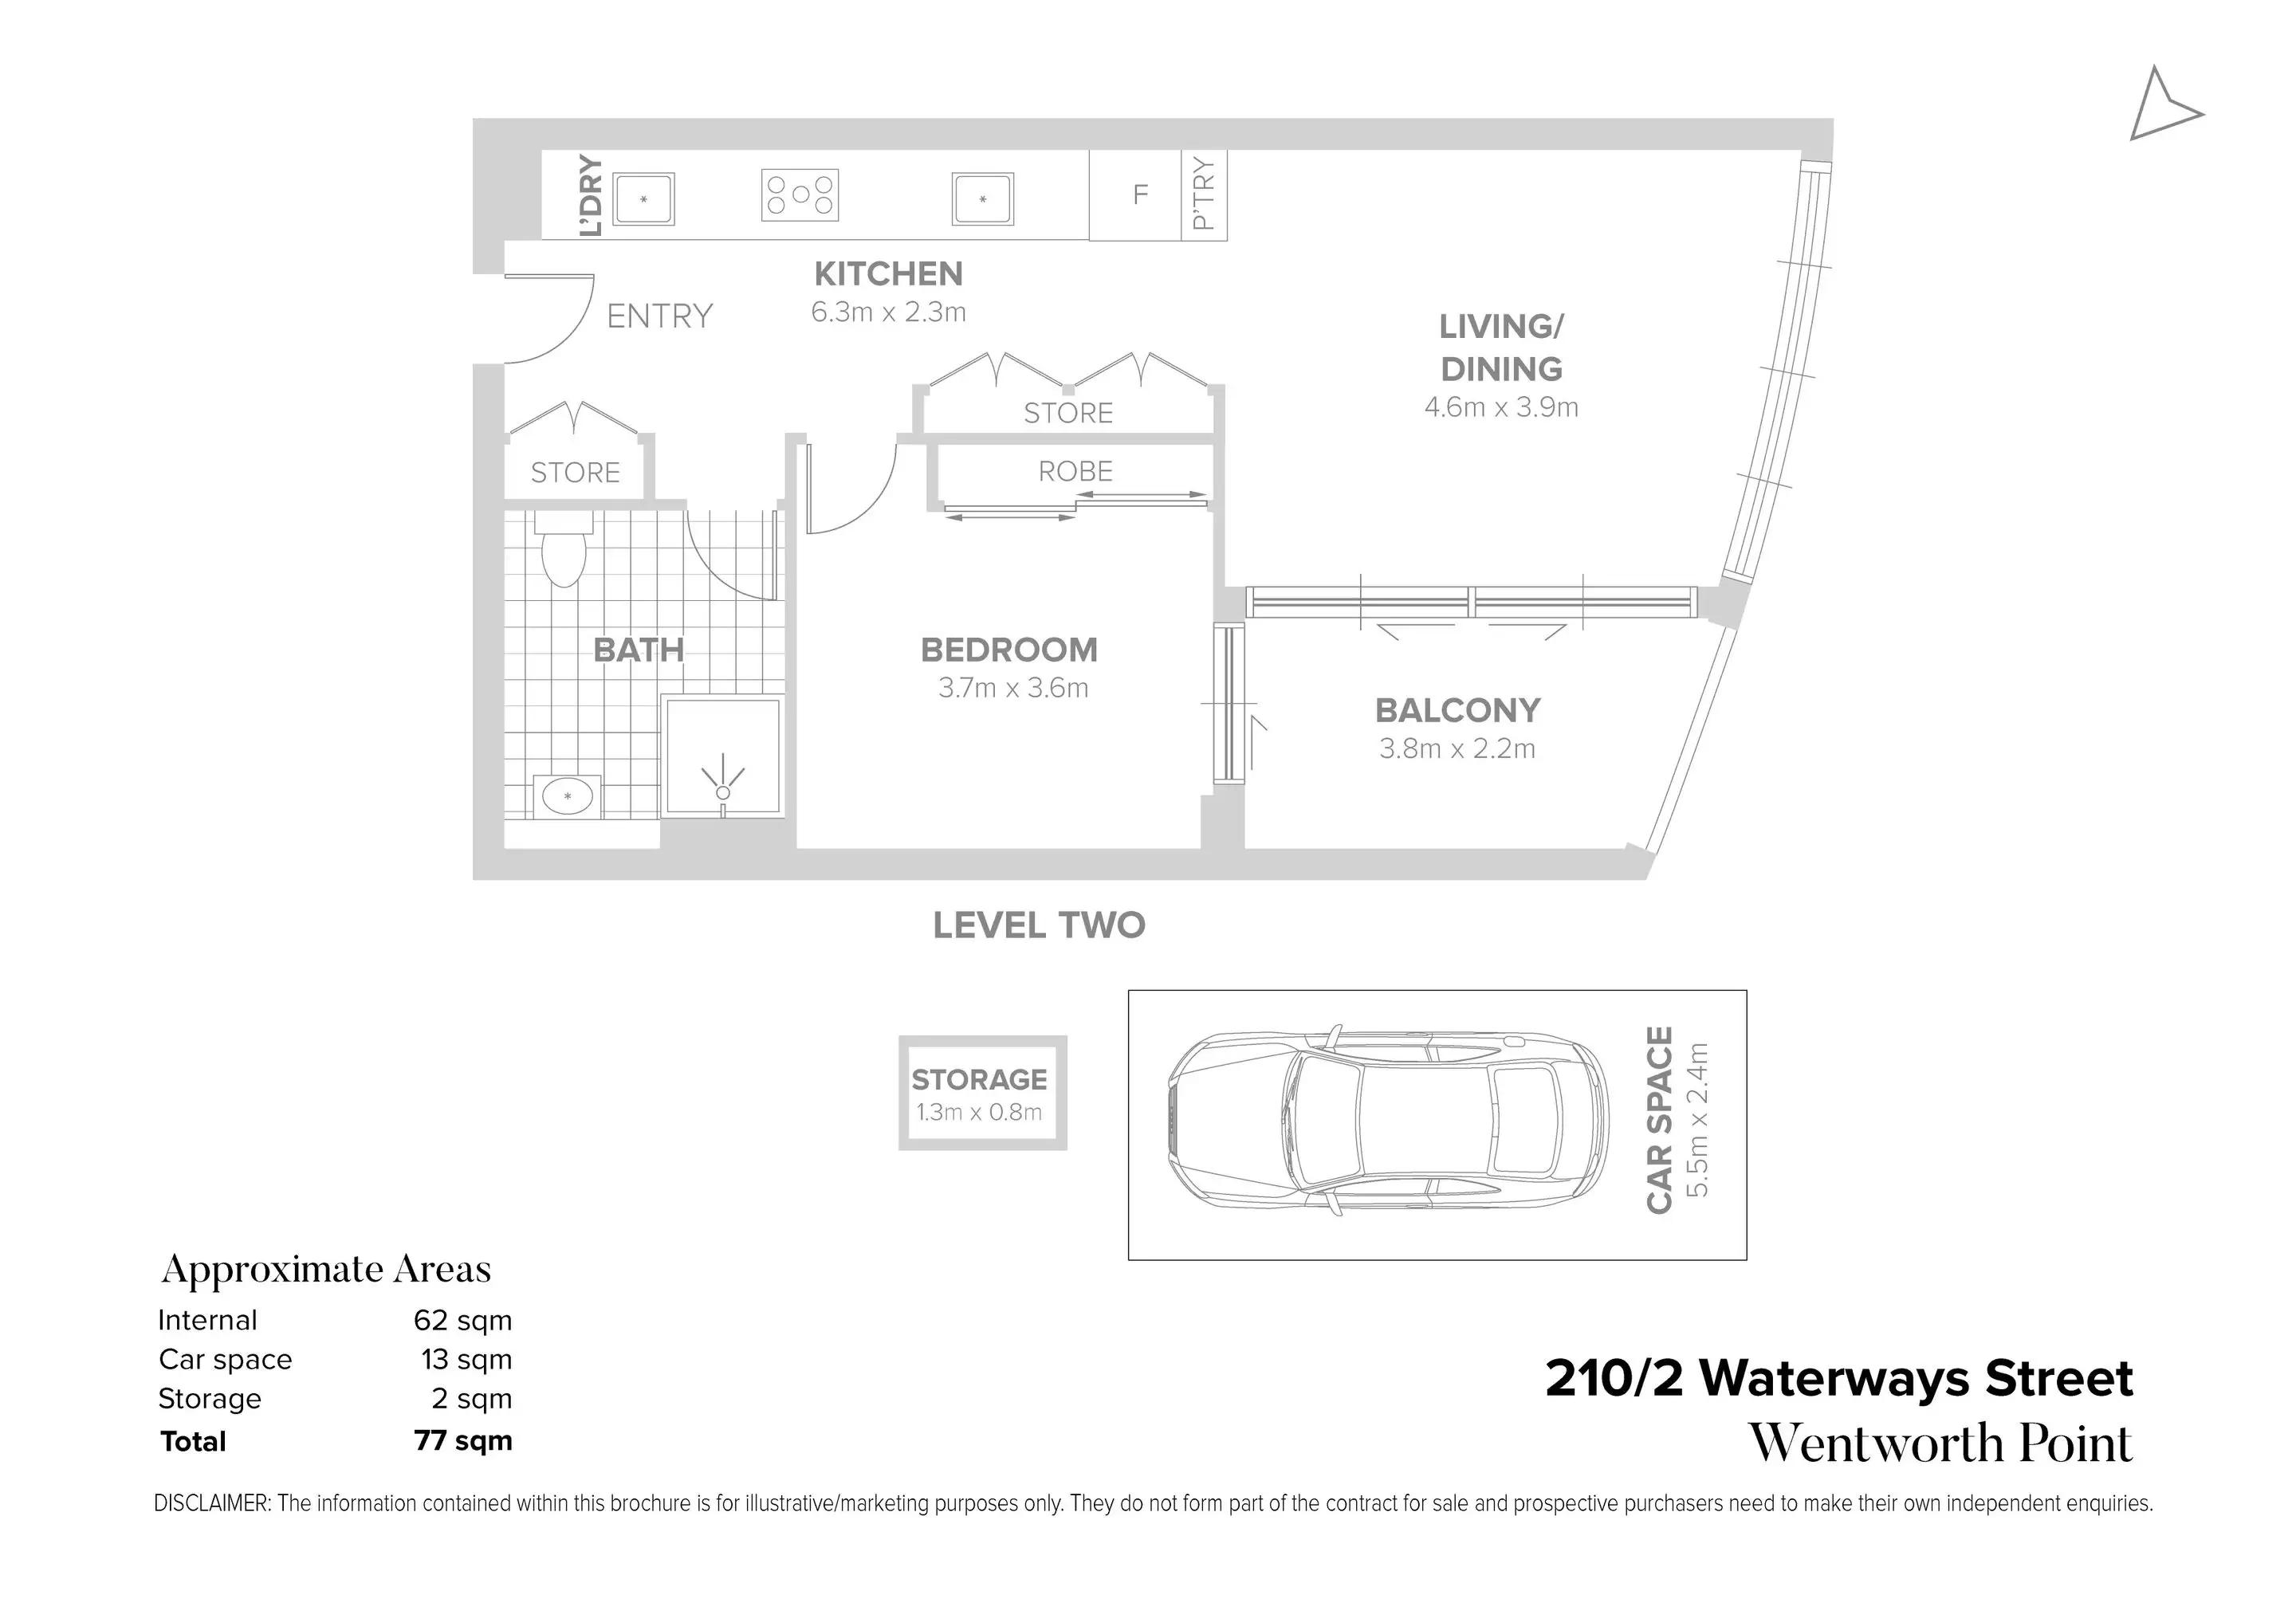 210/2 Waterways Street, Wentworth Point Sold by Chidiac Realty - floorplan